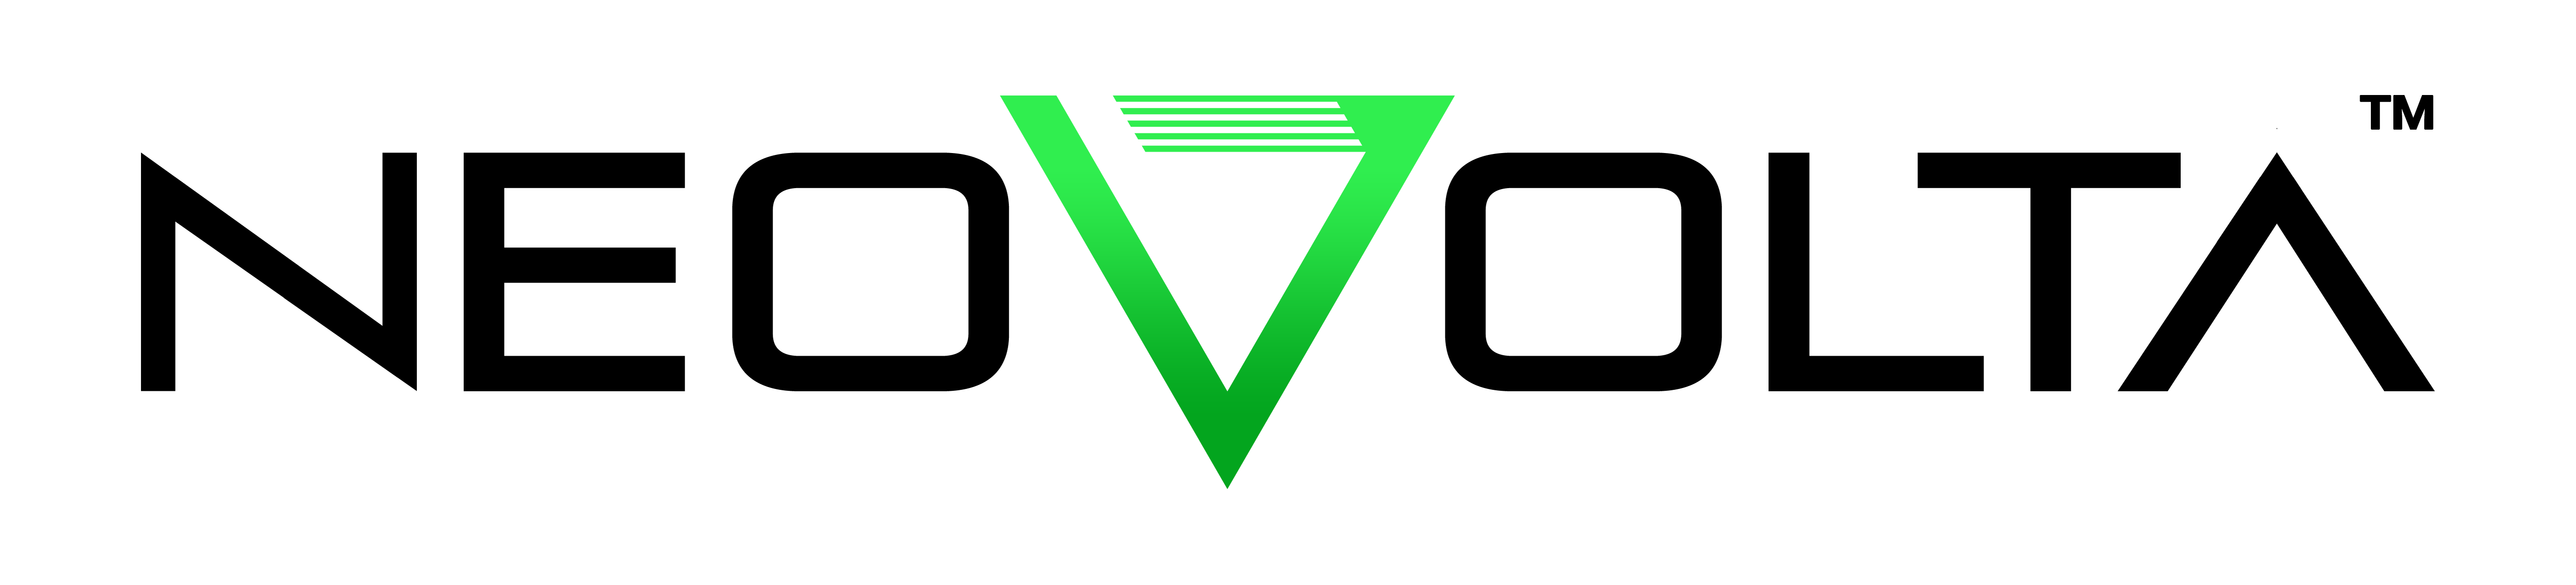 NeoVolta Logo 1.png